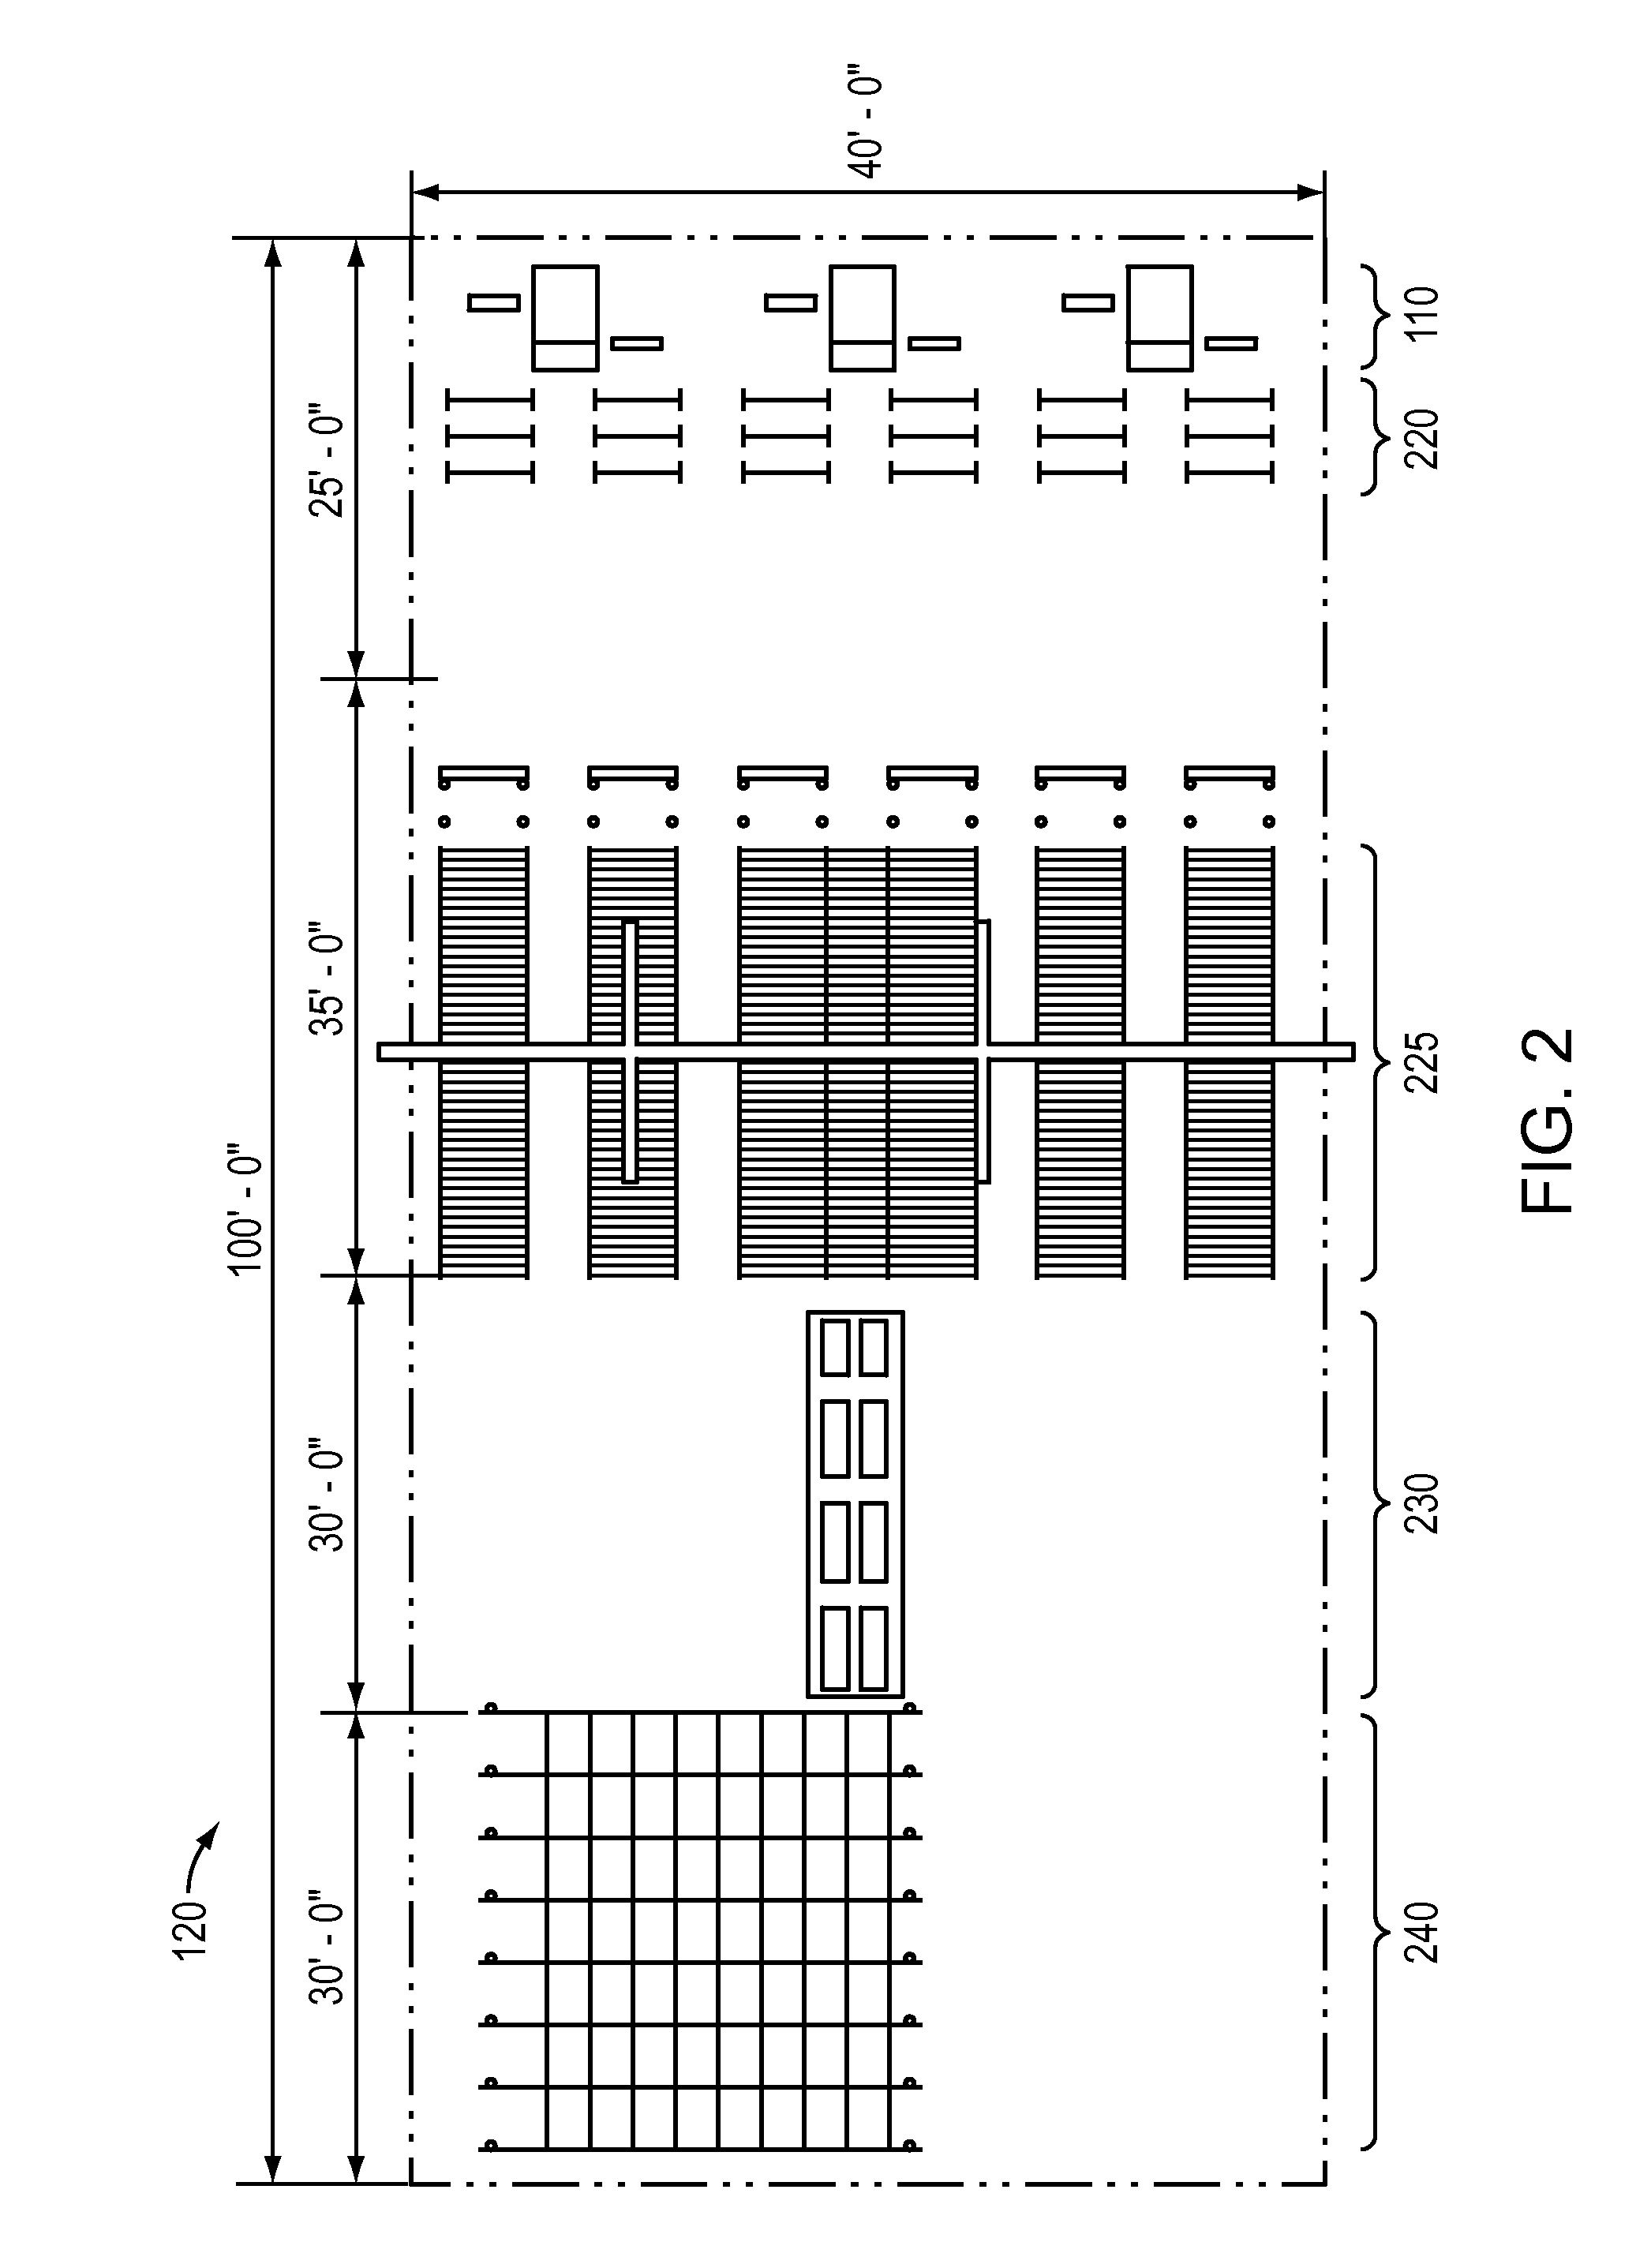 Bi-directional roller table